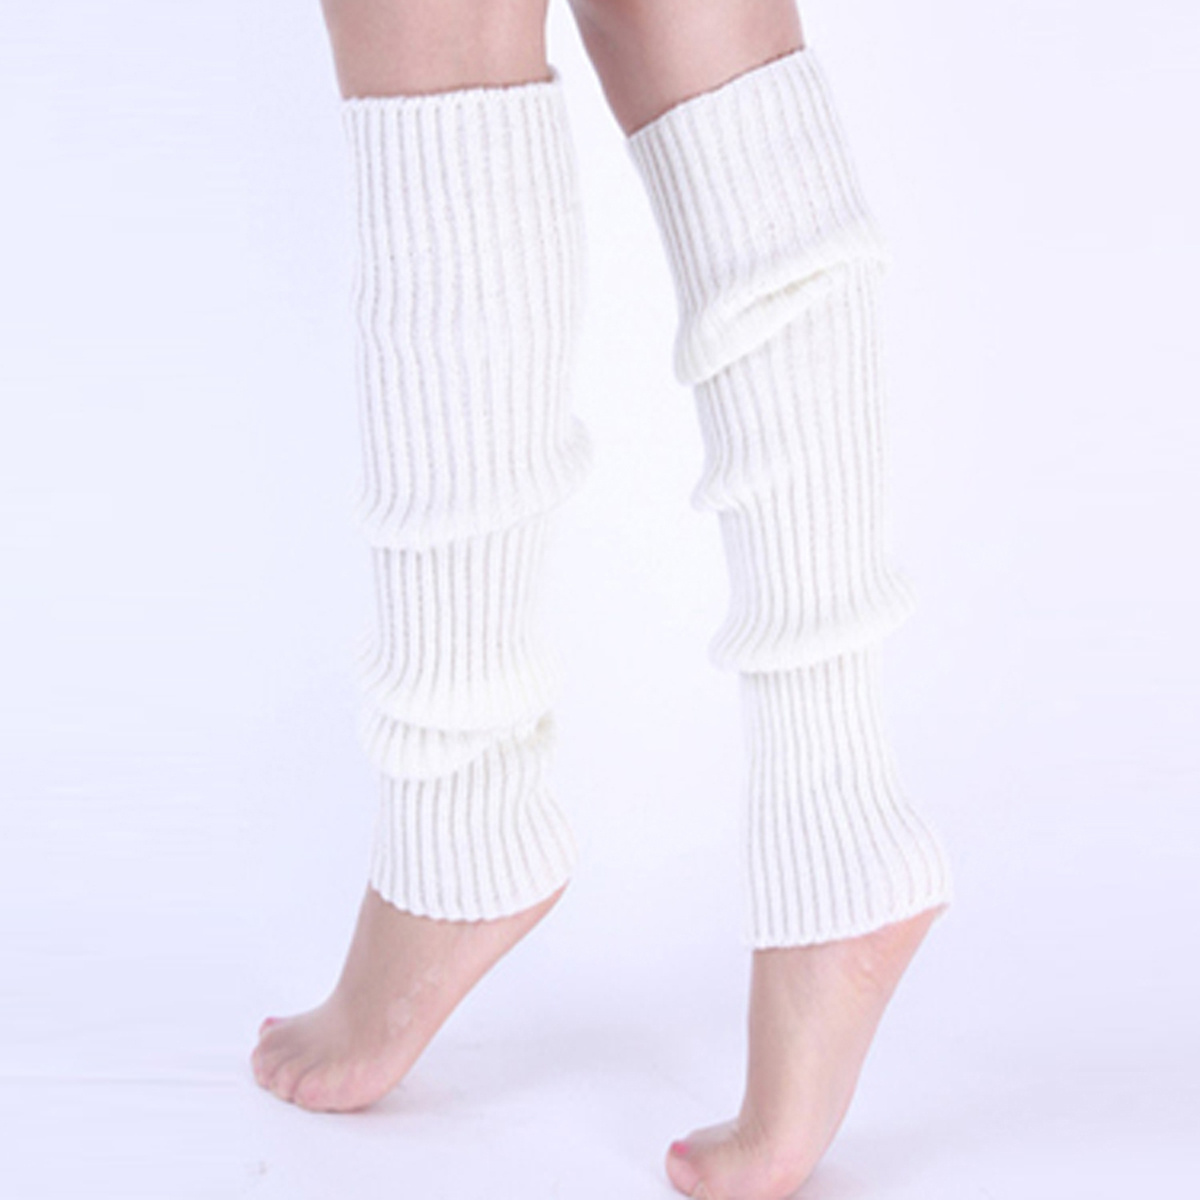 Marino Long Leg Warmers For Women - Winter Knee High Knit Leg Warmer Socks,  Enclosed in an Elegant Gift Box